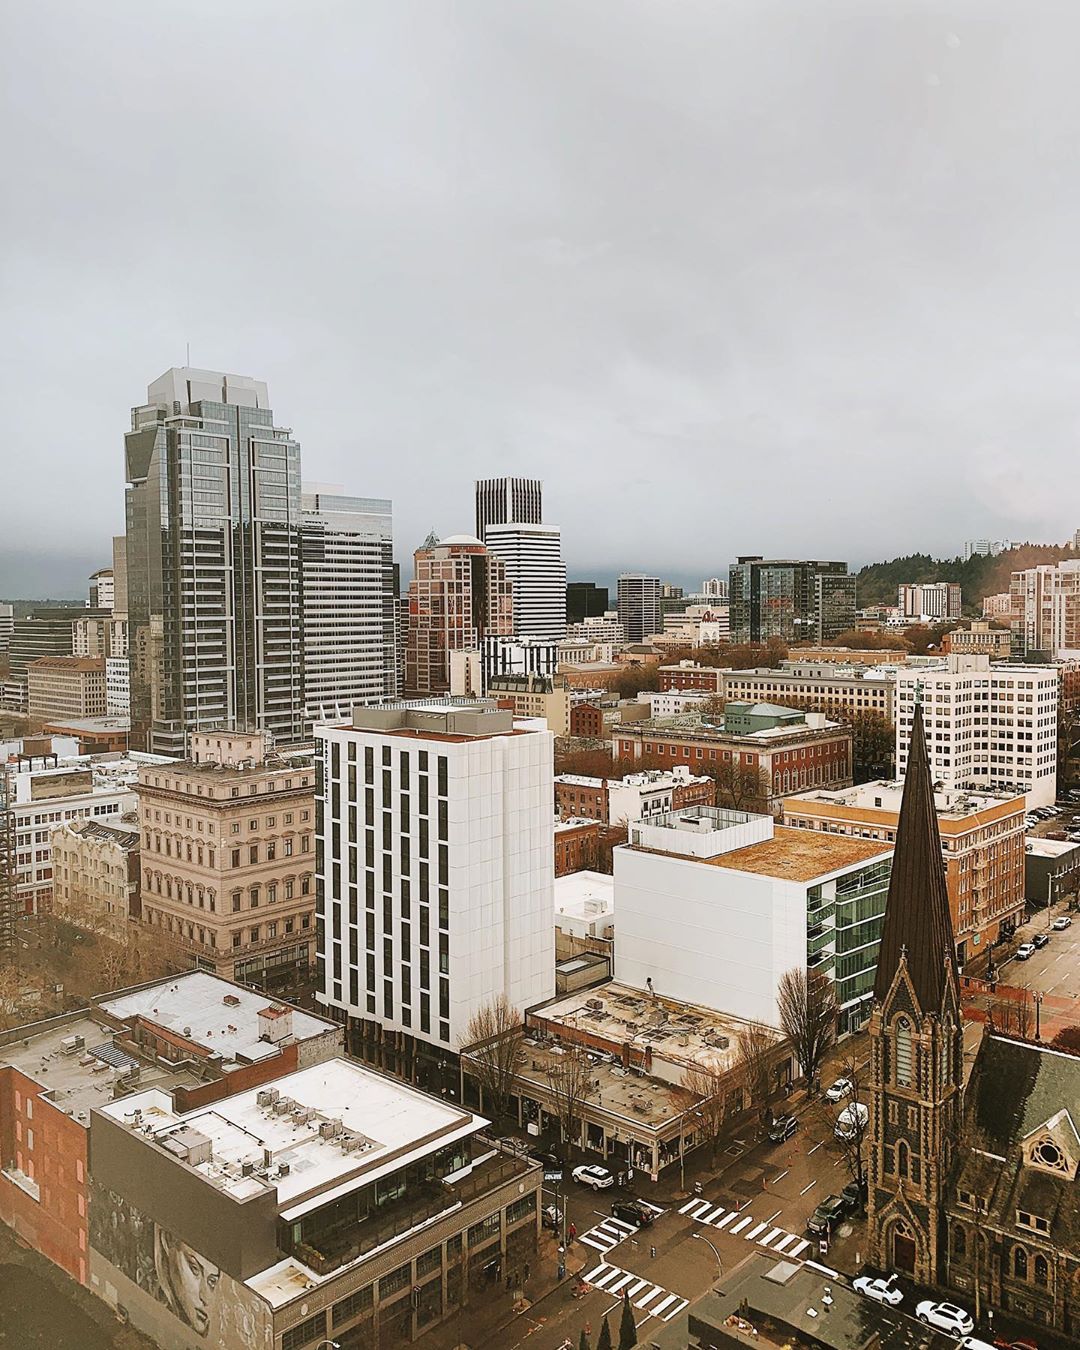 Downtown Portland Skyline with Gray Skies Above. Photo by Instagram user @felicityoftheseas